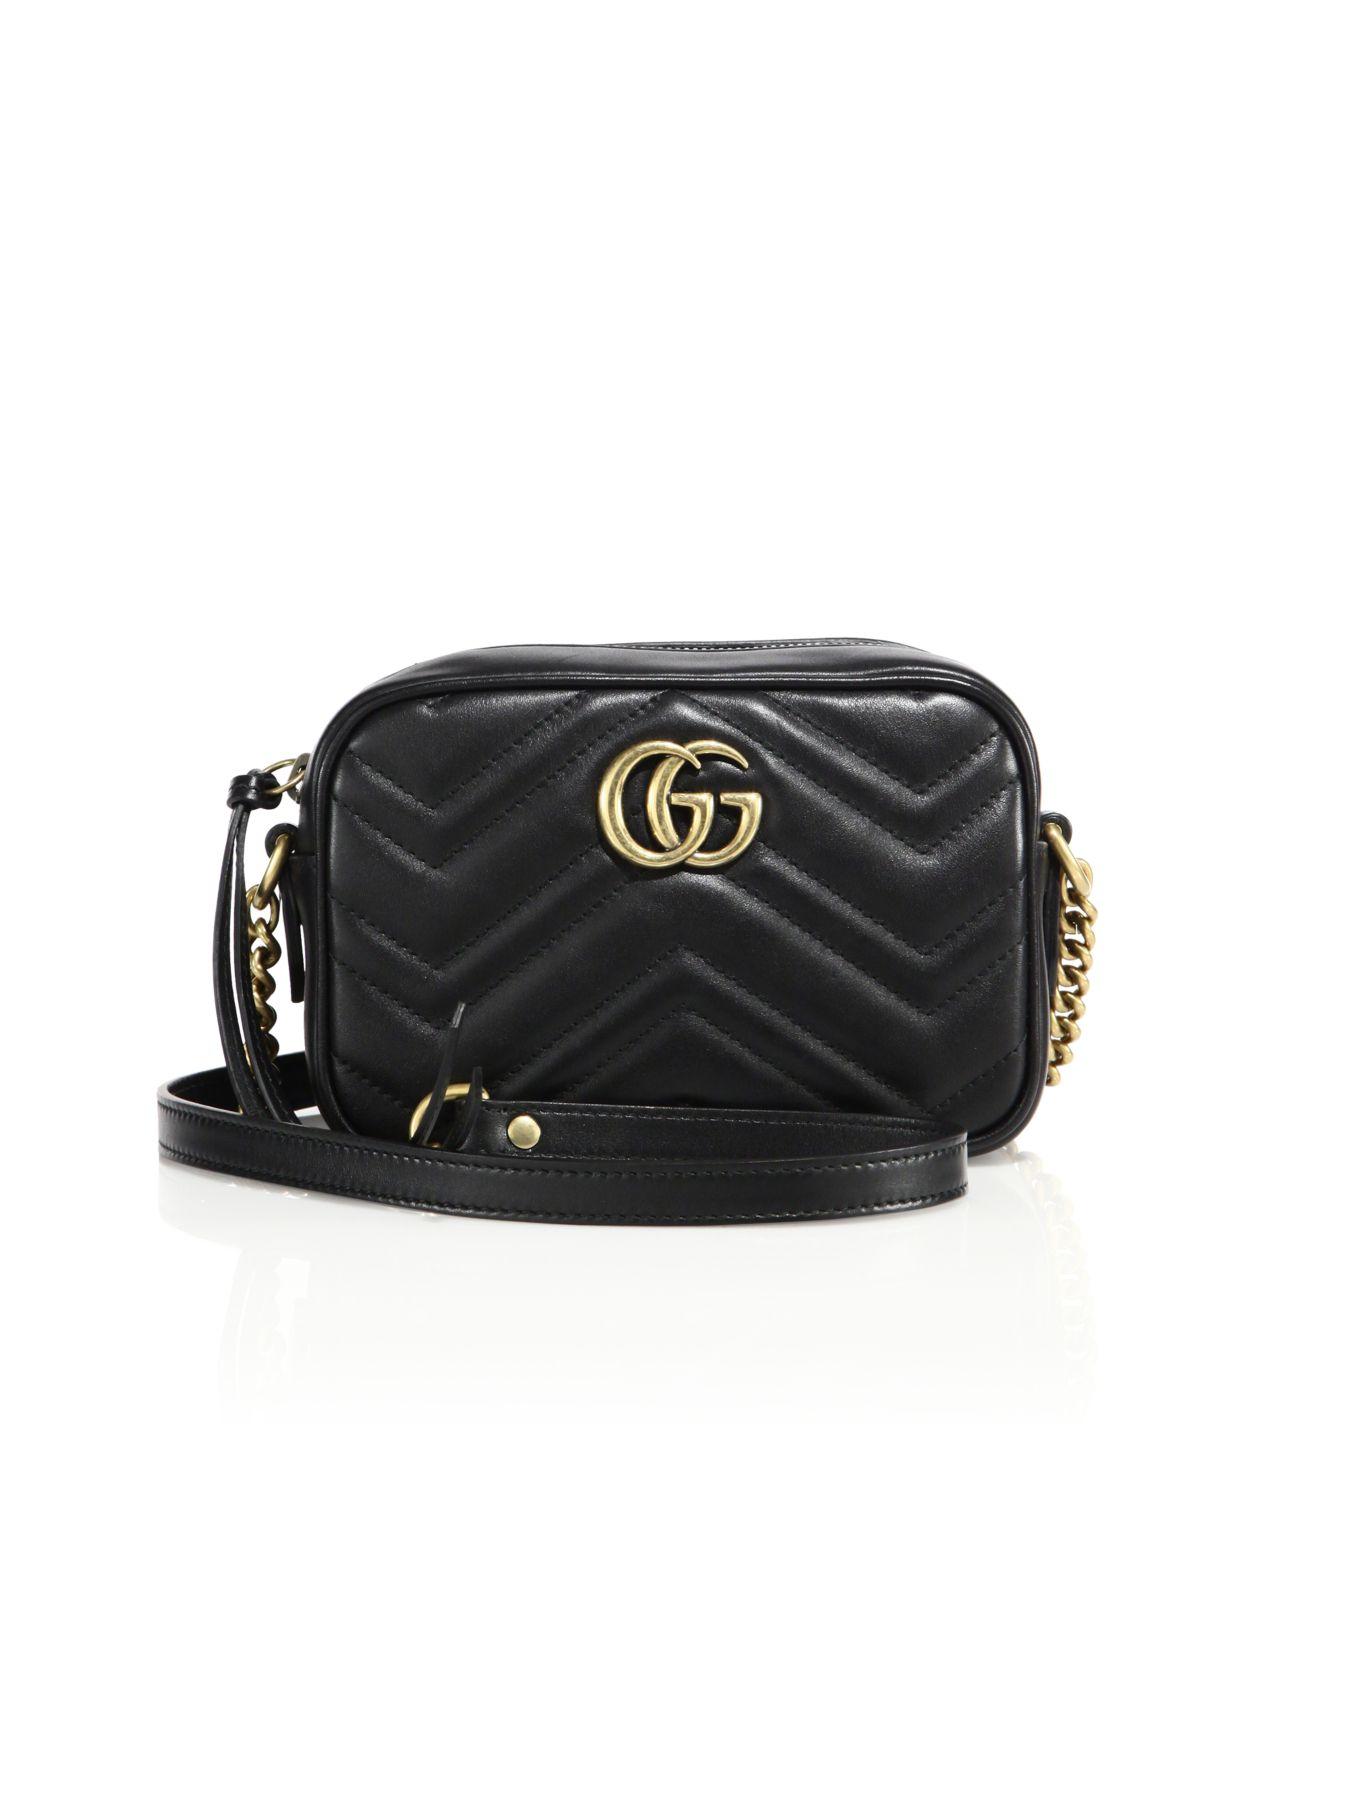 Gucci Leather GG Marmont Mini Matelasse Camera Bag, Black - Save 22% - Lyst